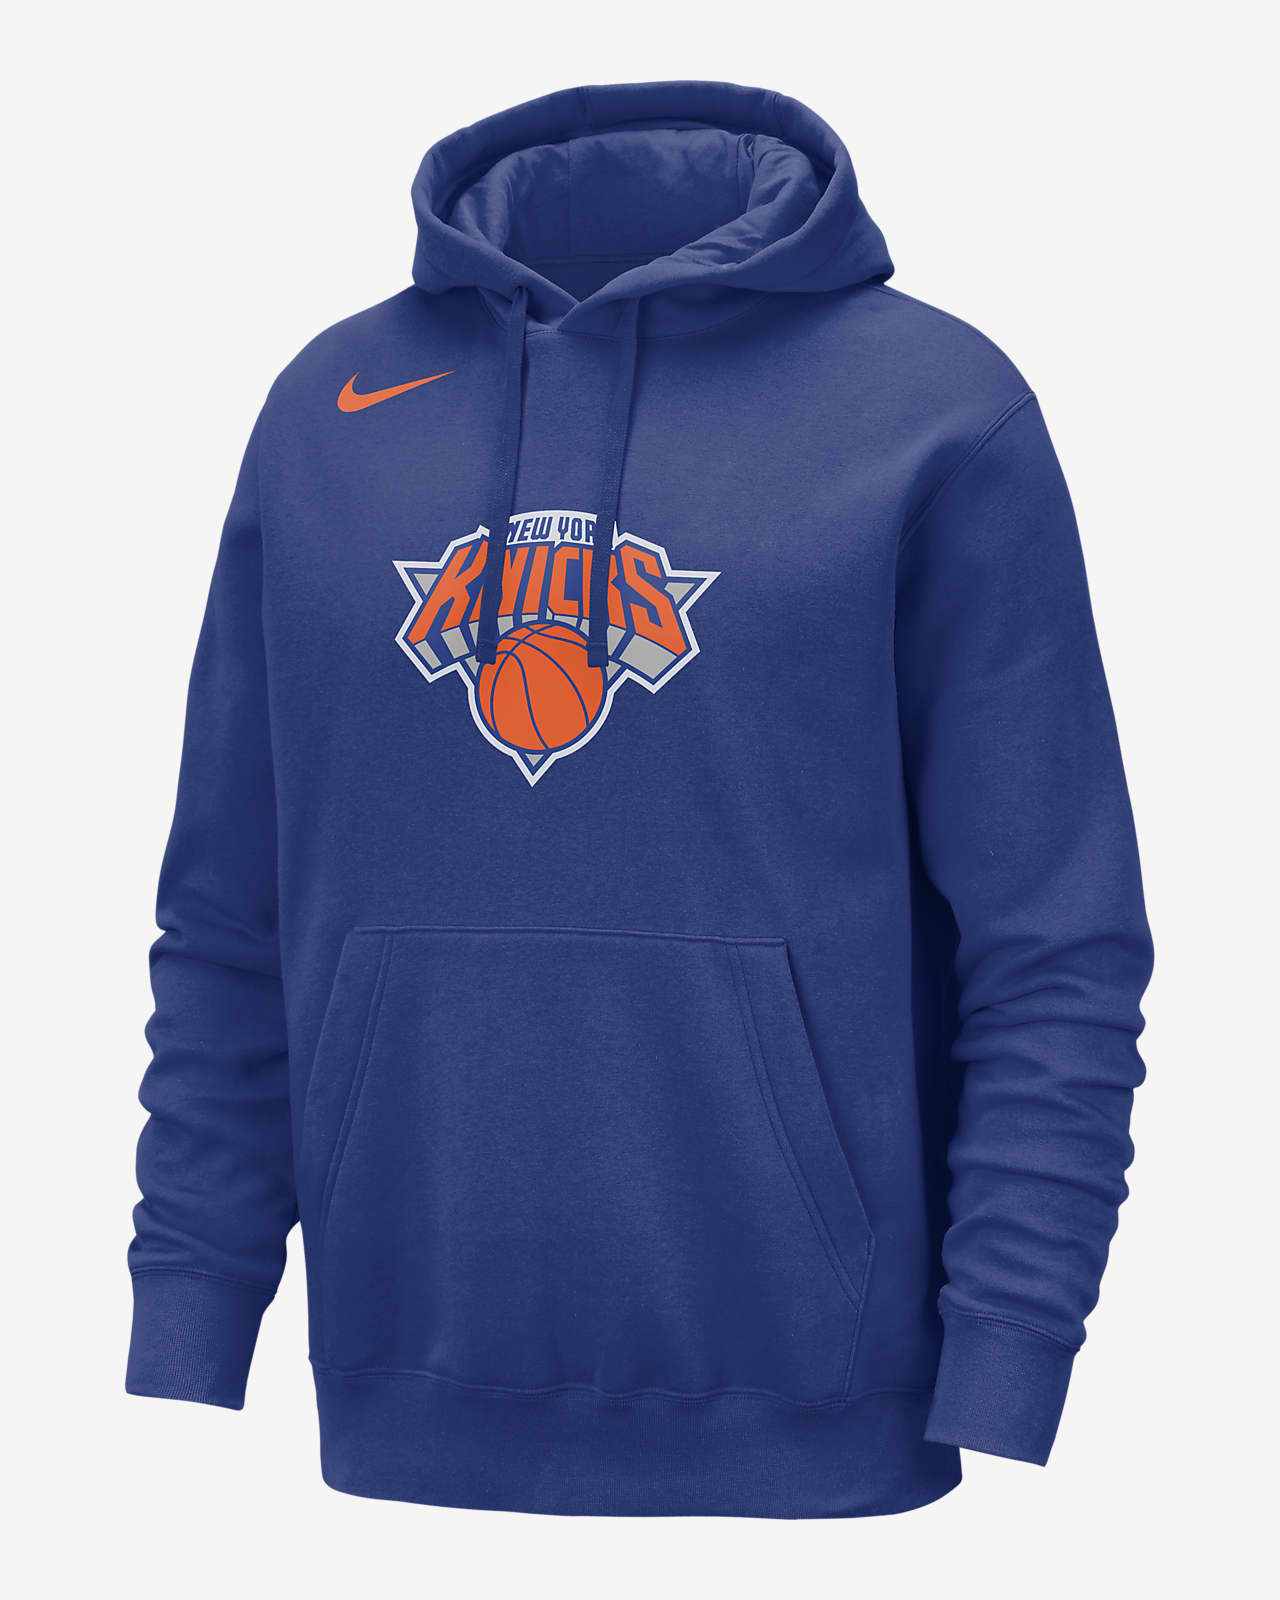 Nike Men's New York Knicks Blue Logo Hoodie, XL